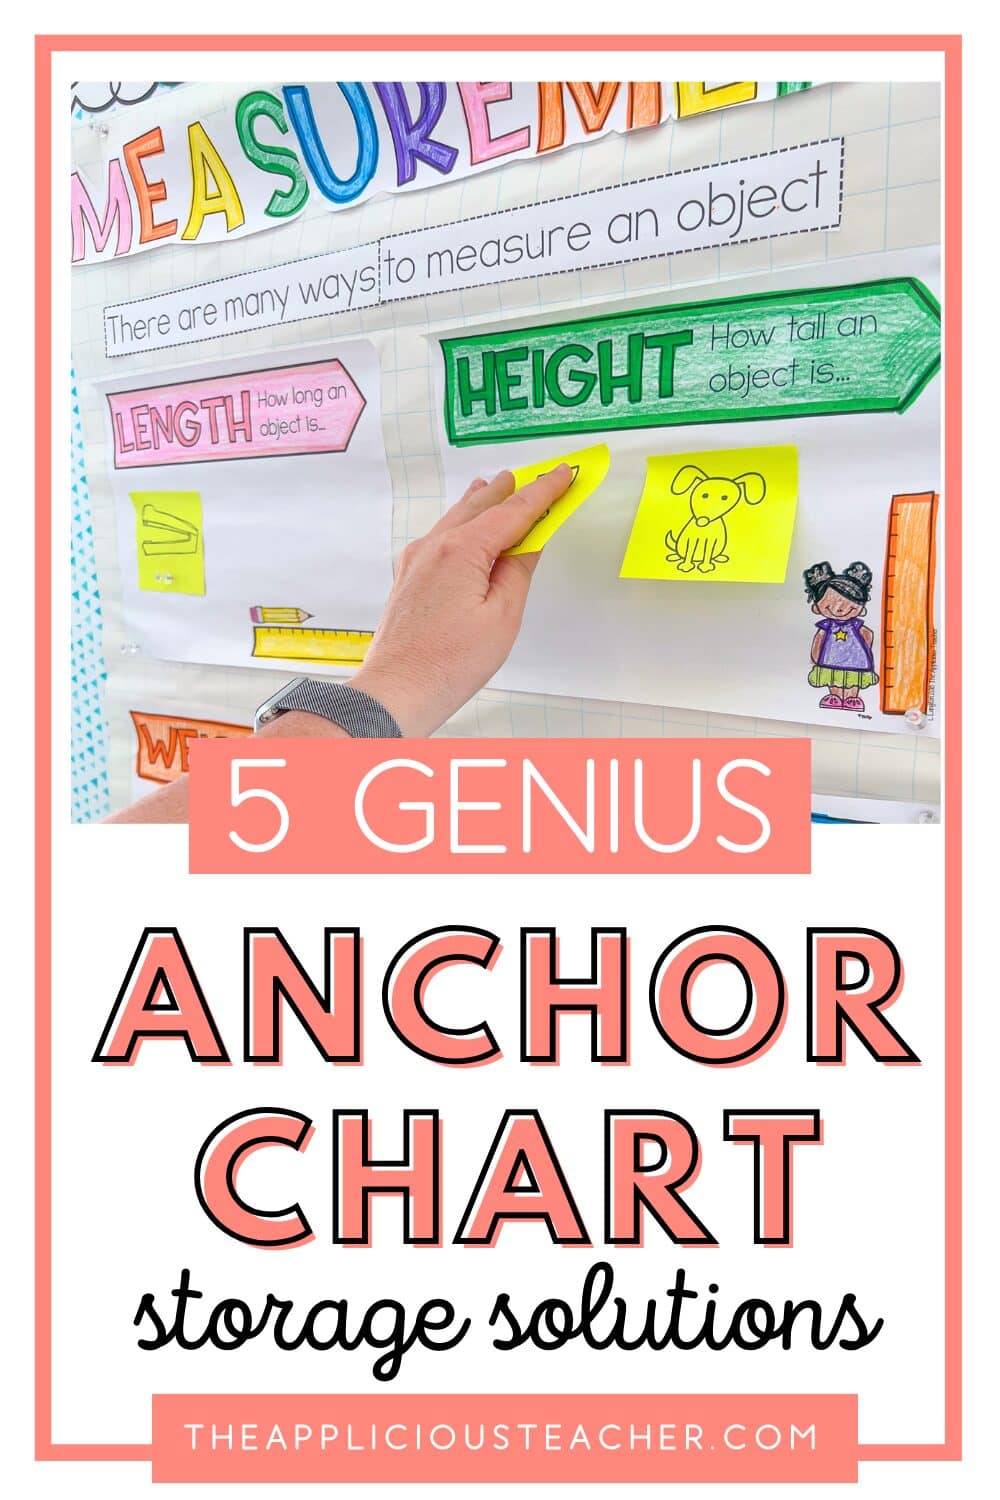 Anchor Charts storage